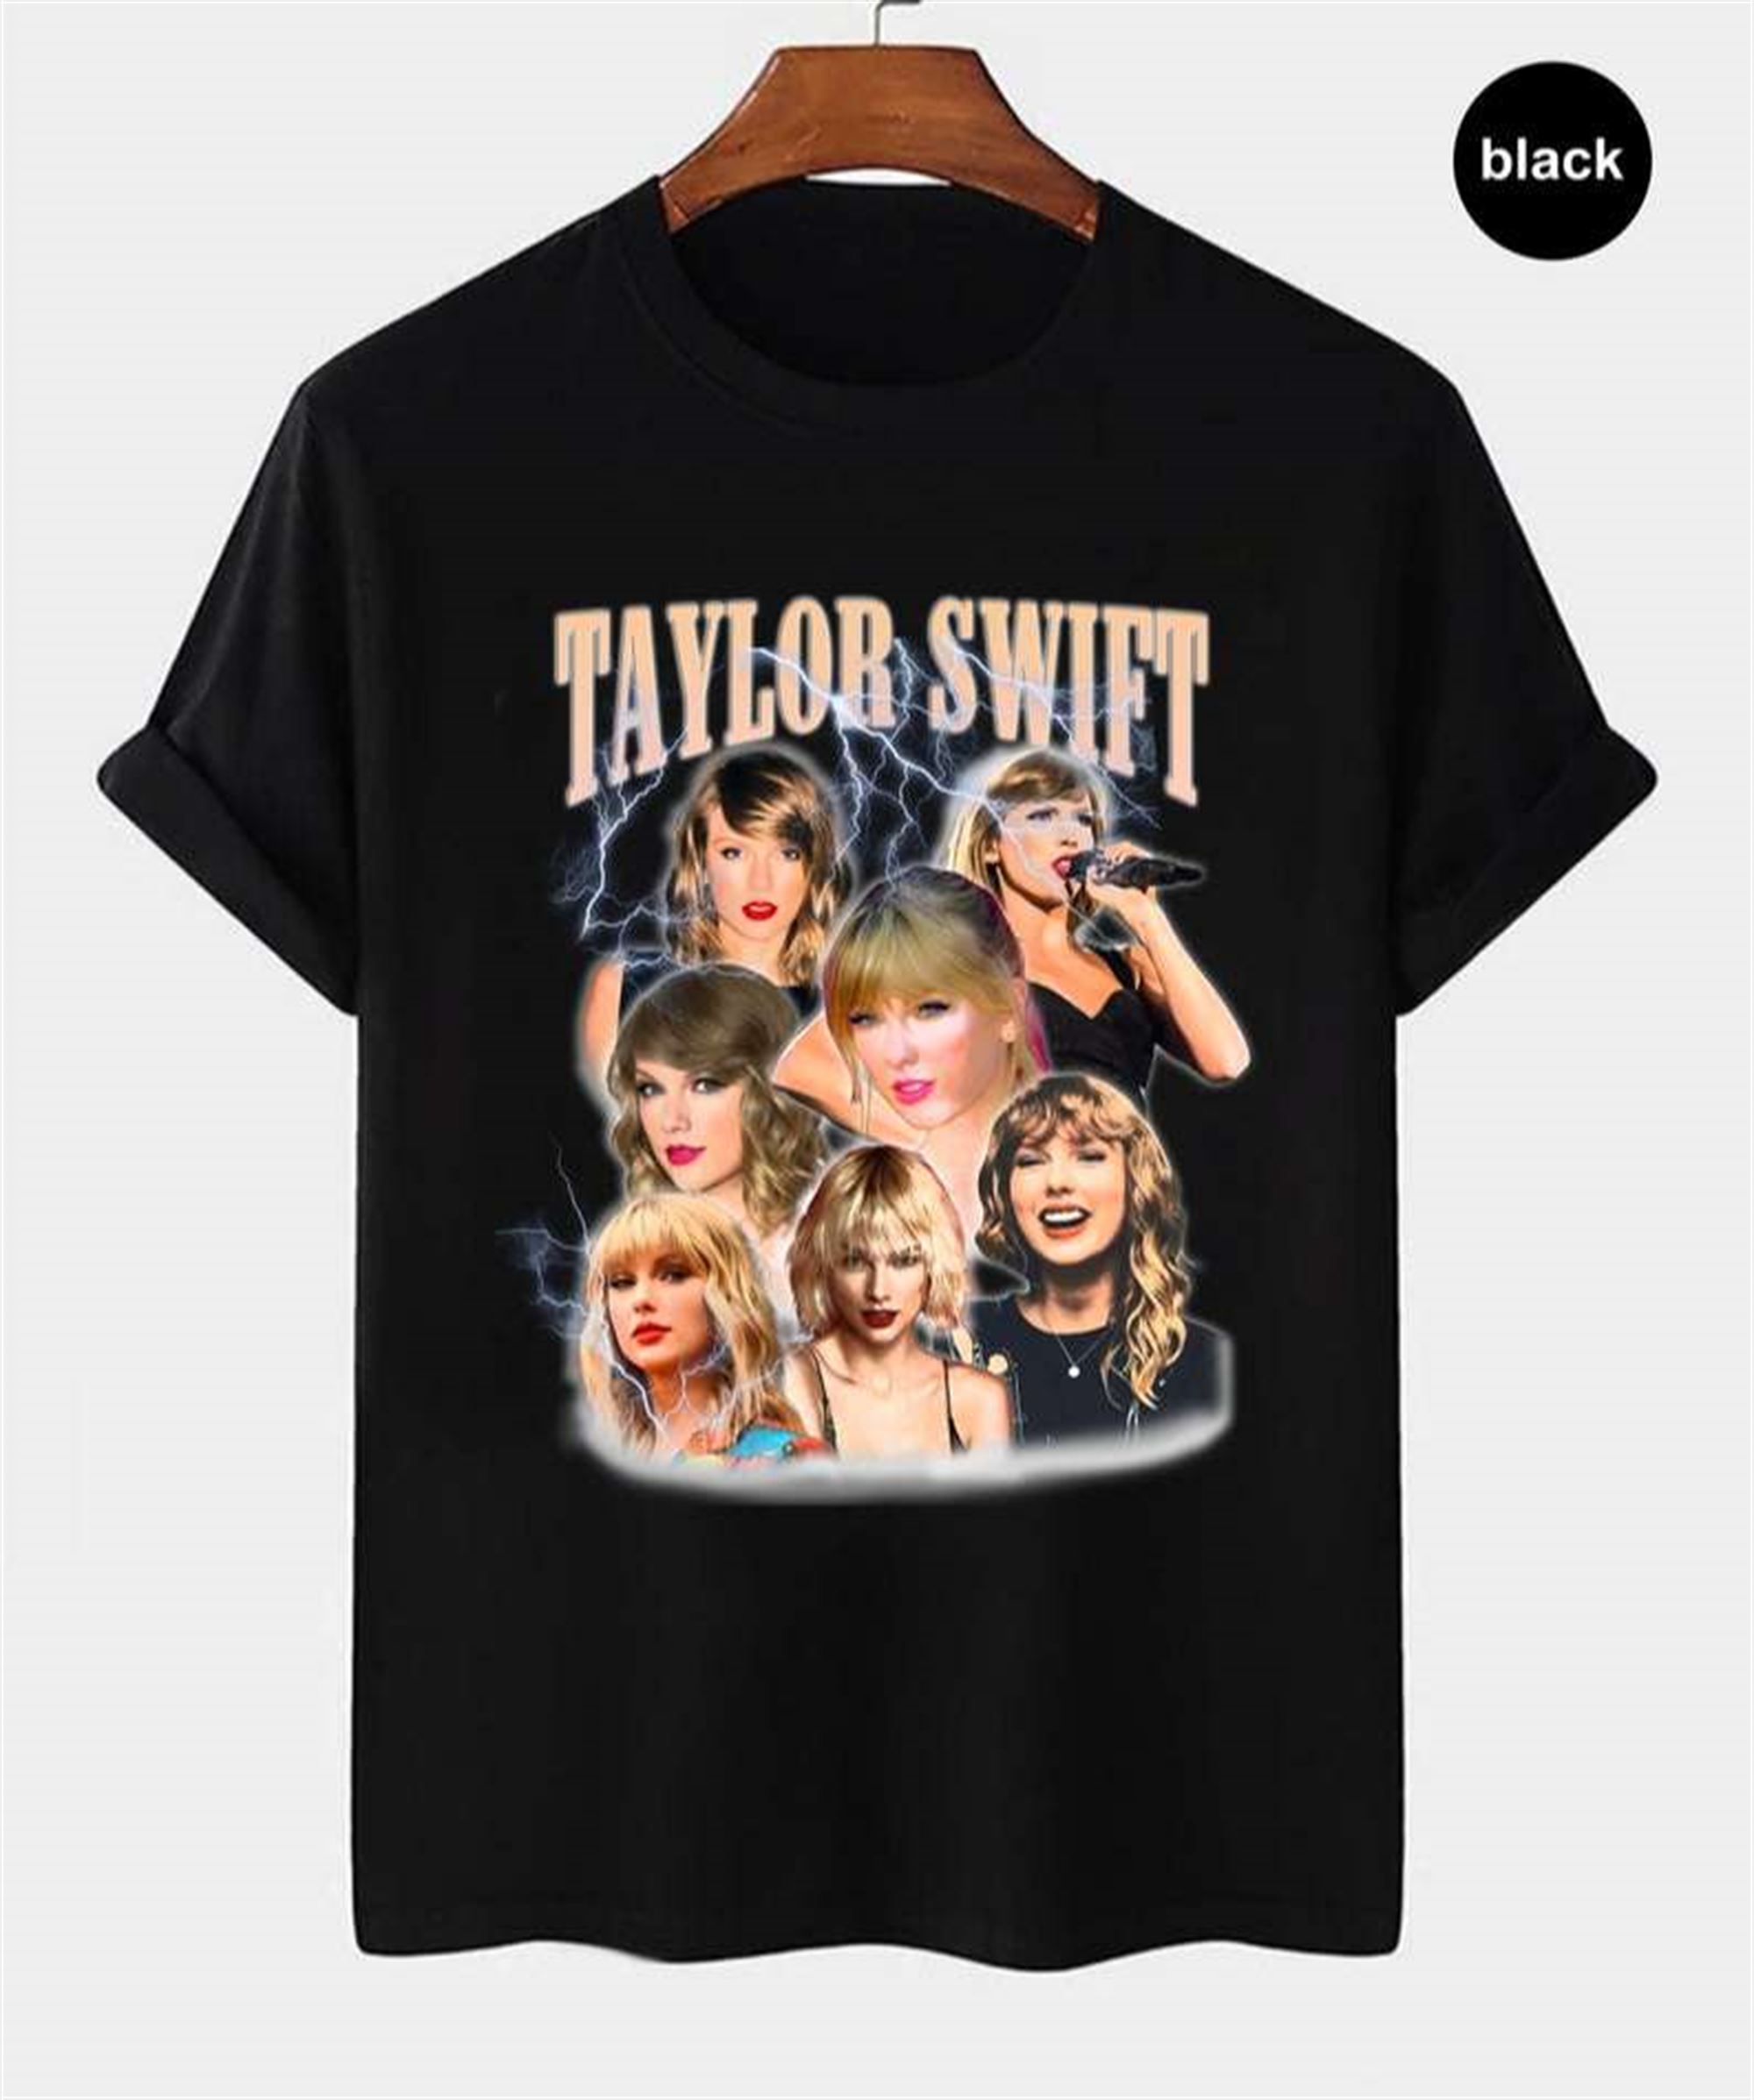 Taylor Swift T Shirt Designs - Image to u